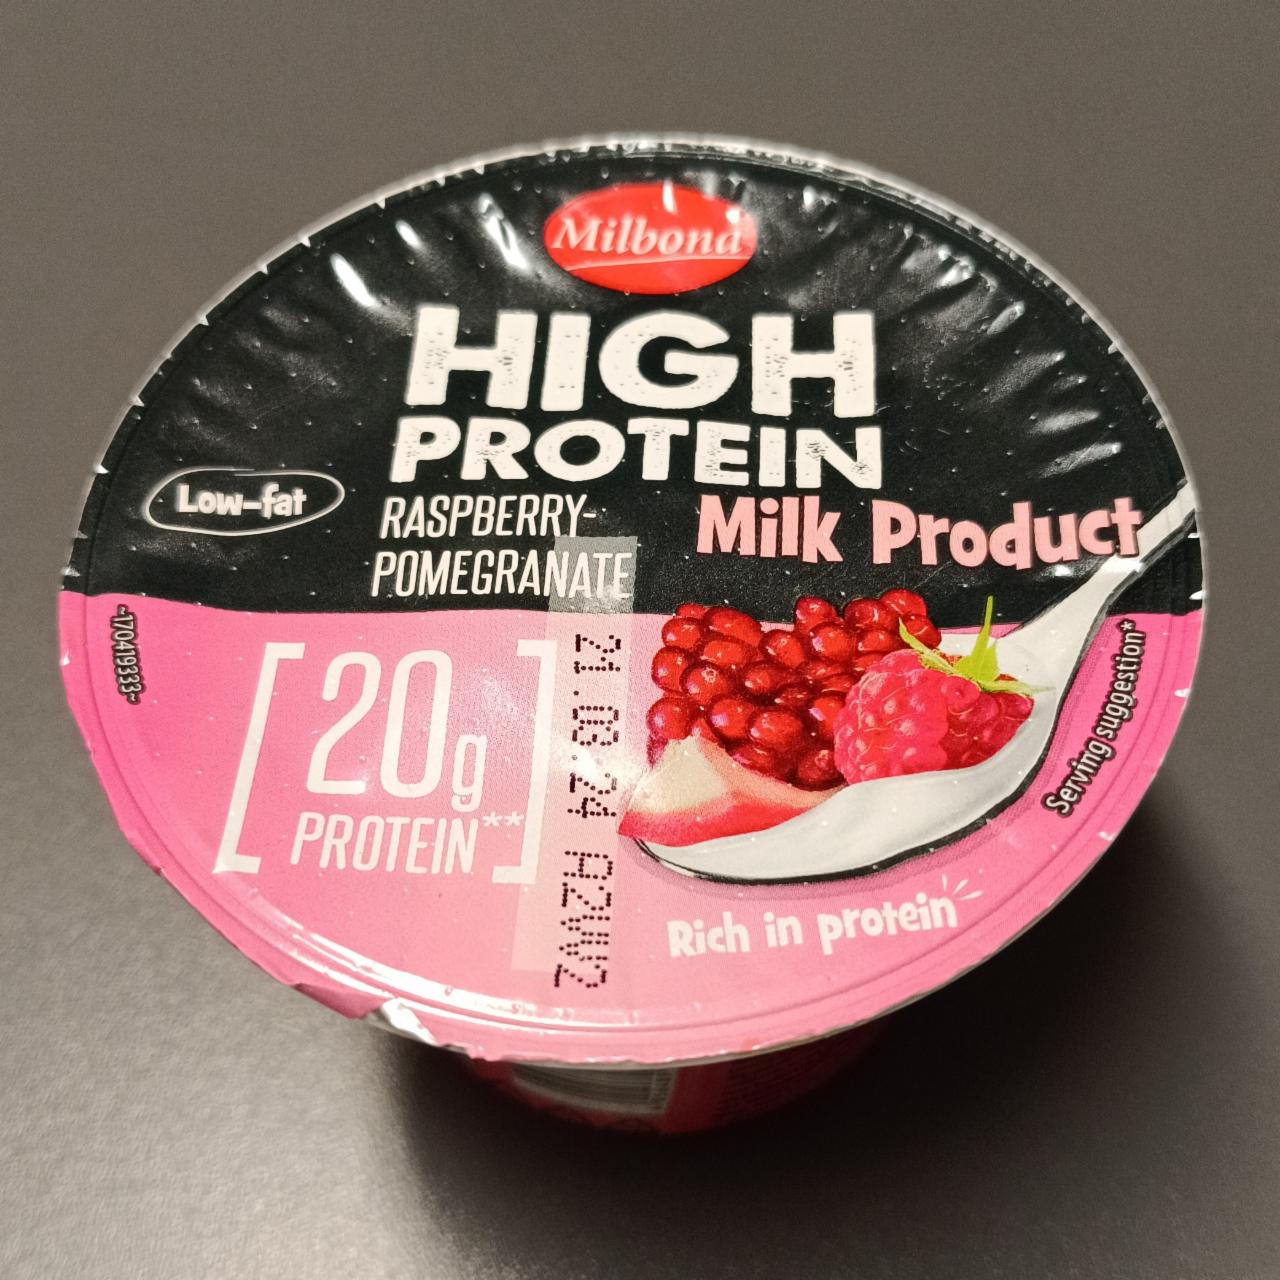 Képek - High protein milk product Rasberry-pomegranate Milbona